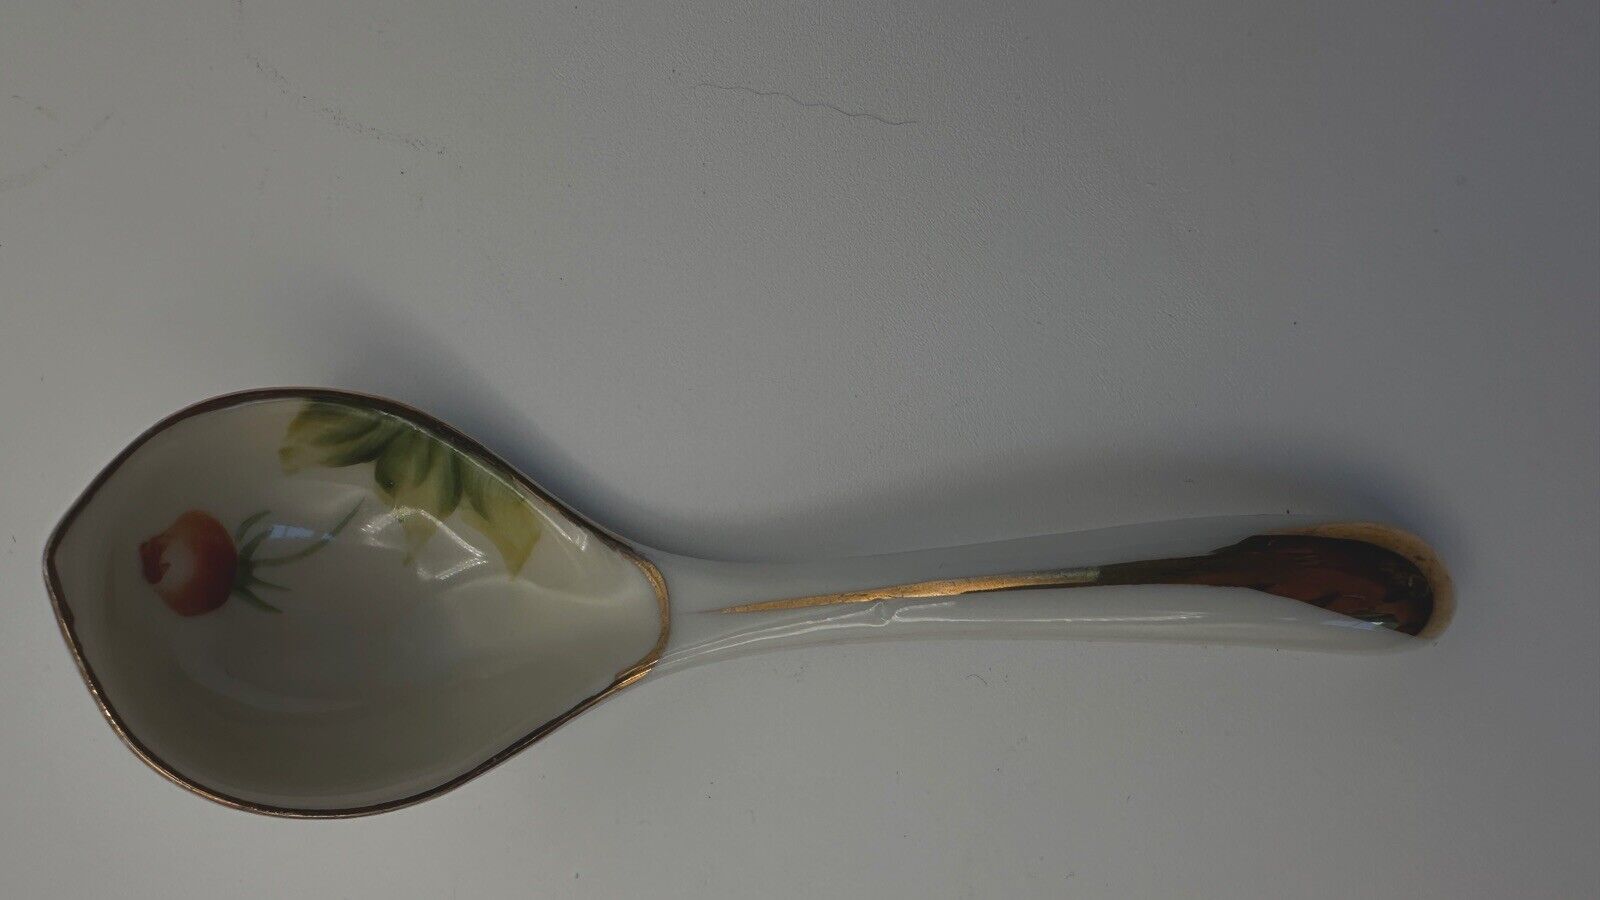 Vintage Noritake Small Ladle Spoon Hand-Painted Made in Japan Rose Bud Porcelain